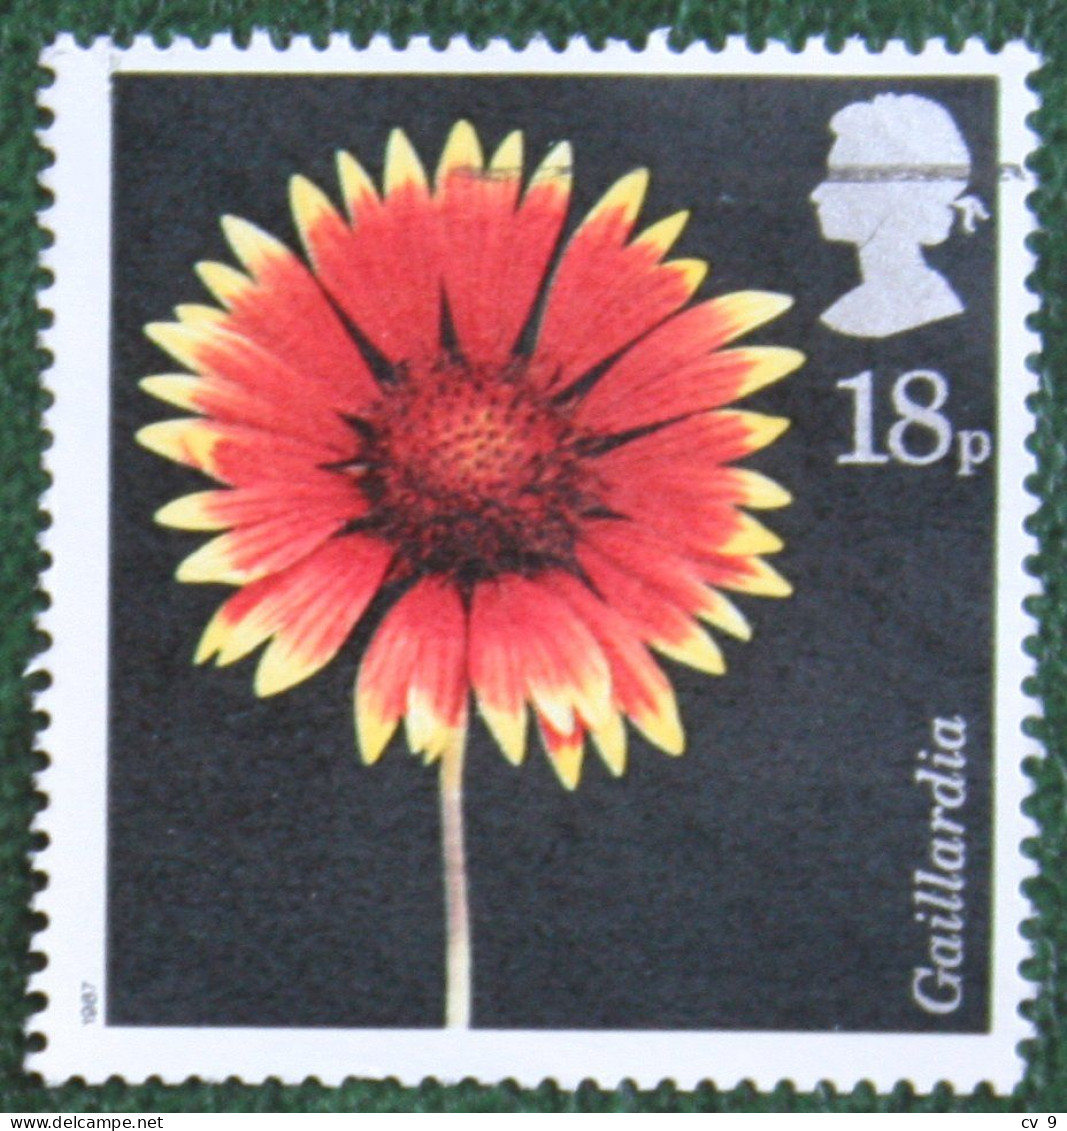 FLOWERS Fleur Blumen (Mi 1097) 1987 Used Gebruikt Oblitere ENGLAND GRANDE-BRETAGNE GB GREAT BRITAIN - Gebruikt